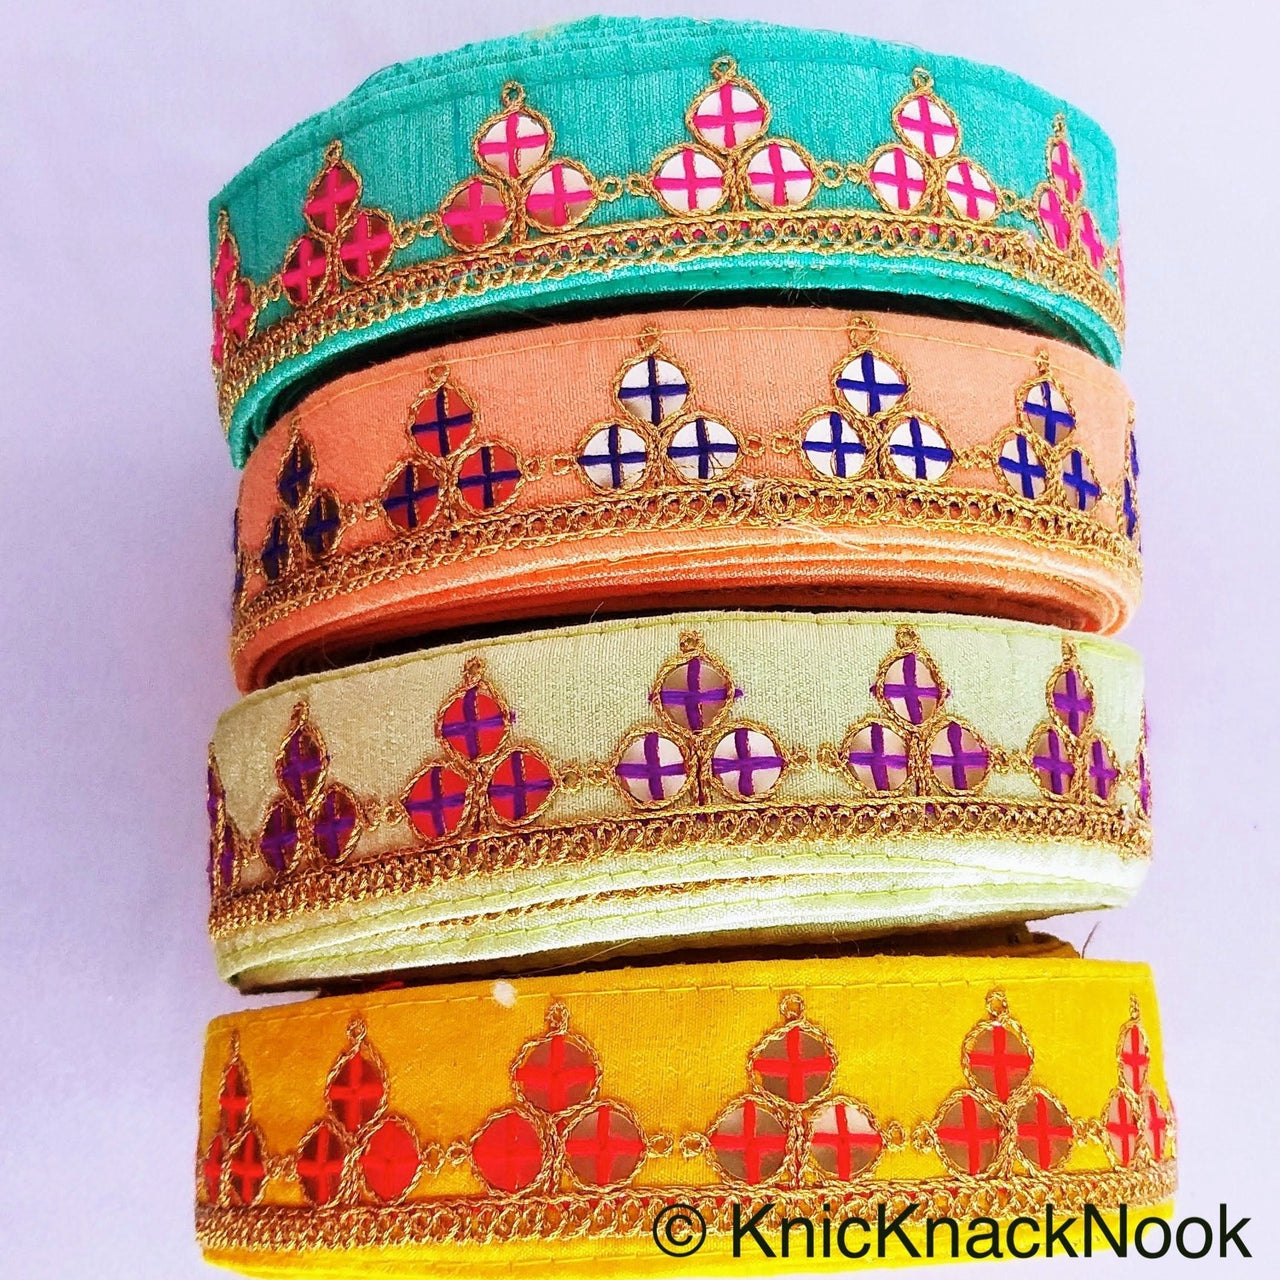 Mirrored Yellow/ Mint Green/ Cyan Blue/ Melon Orange Fabric Trim With Gold Embroidery, Indian Sari border - 210119L291/92/93/94